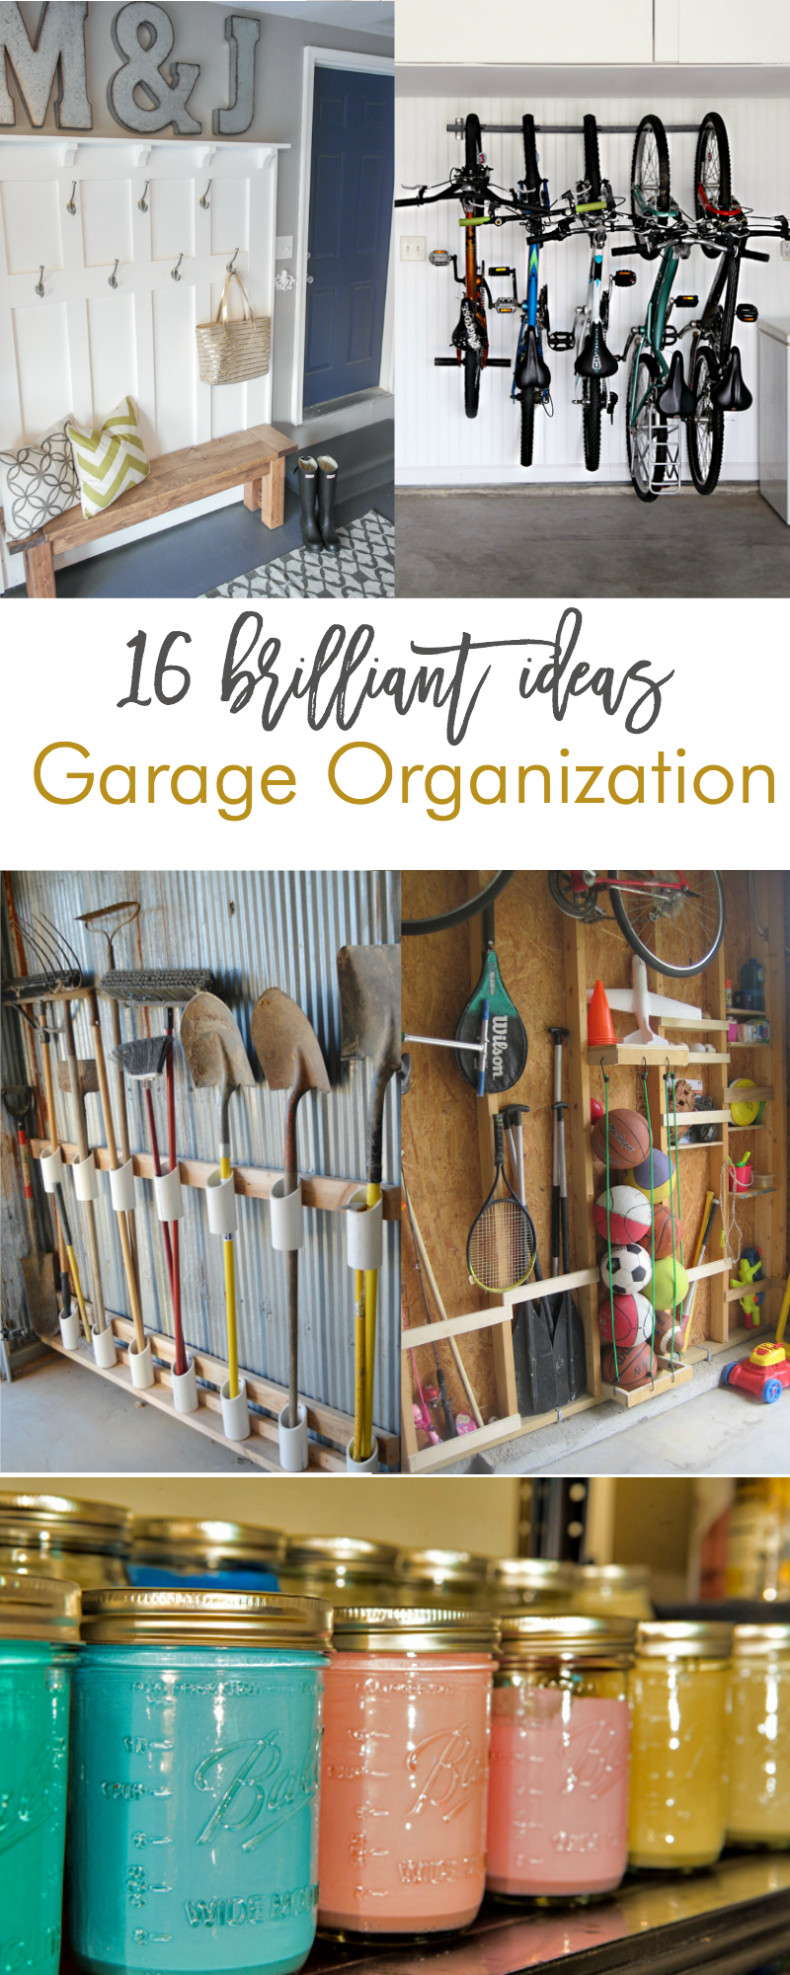 Best ideas about Organization Ideas DIY
. Save or Pin 16 Brilliant DIY Garage Organization Ideas Now.